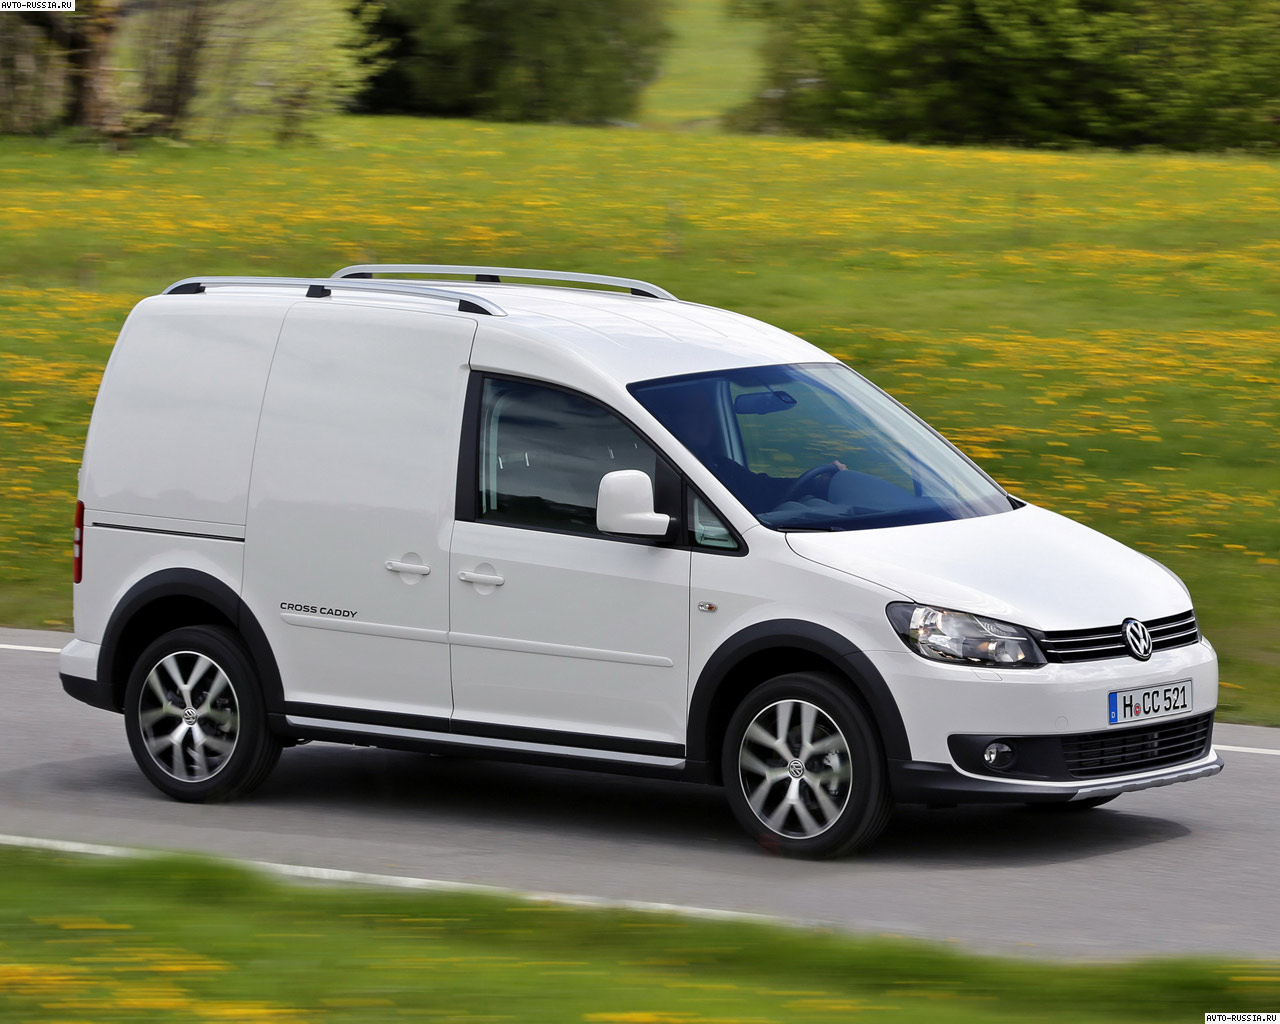 Volkswagen Cross Caddy - характеристики и цена фотографии и обзор